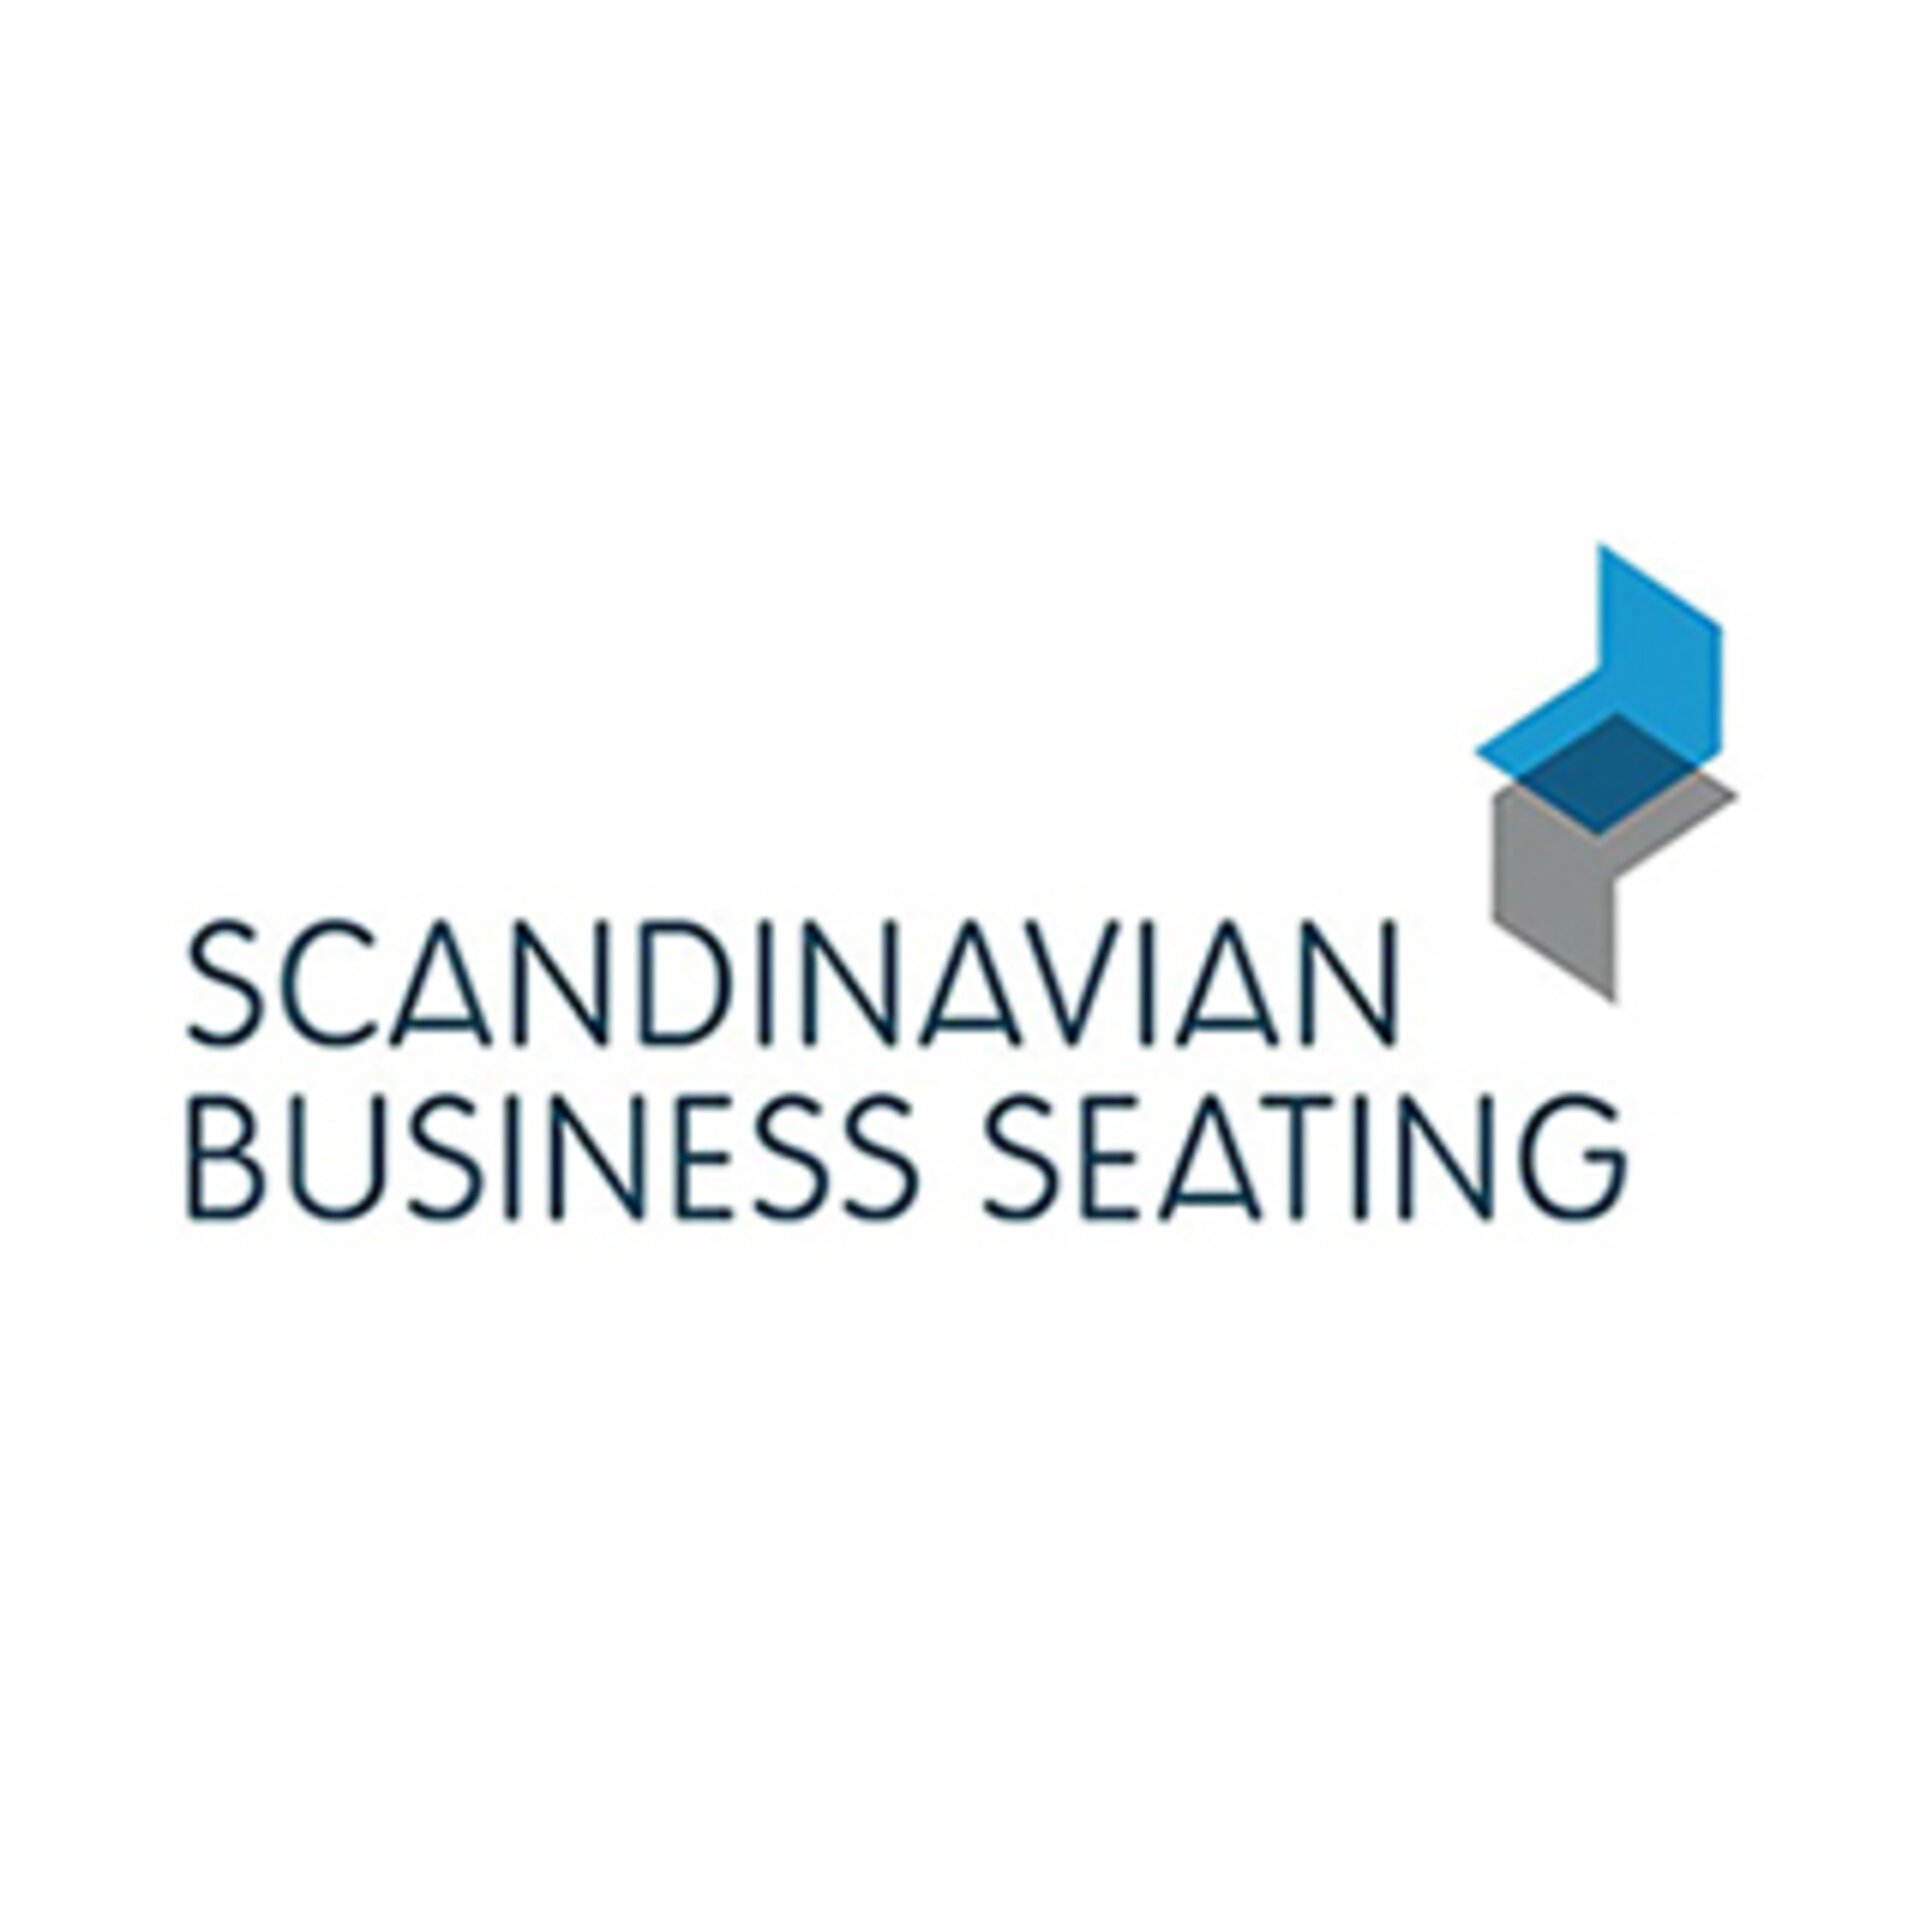 Logo "SCANDINAVIAN BUSINESS SEATING"